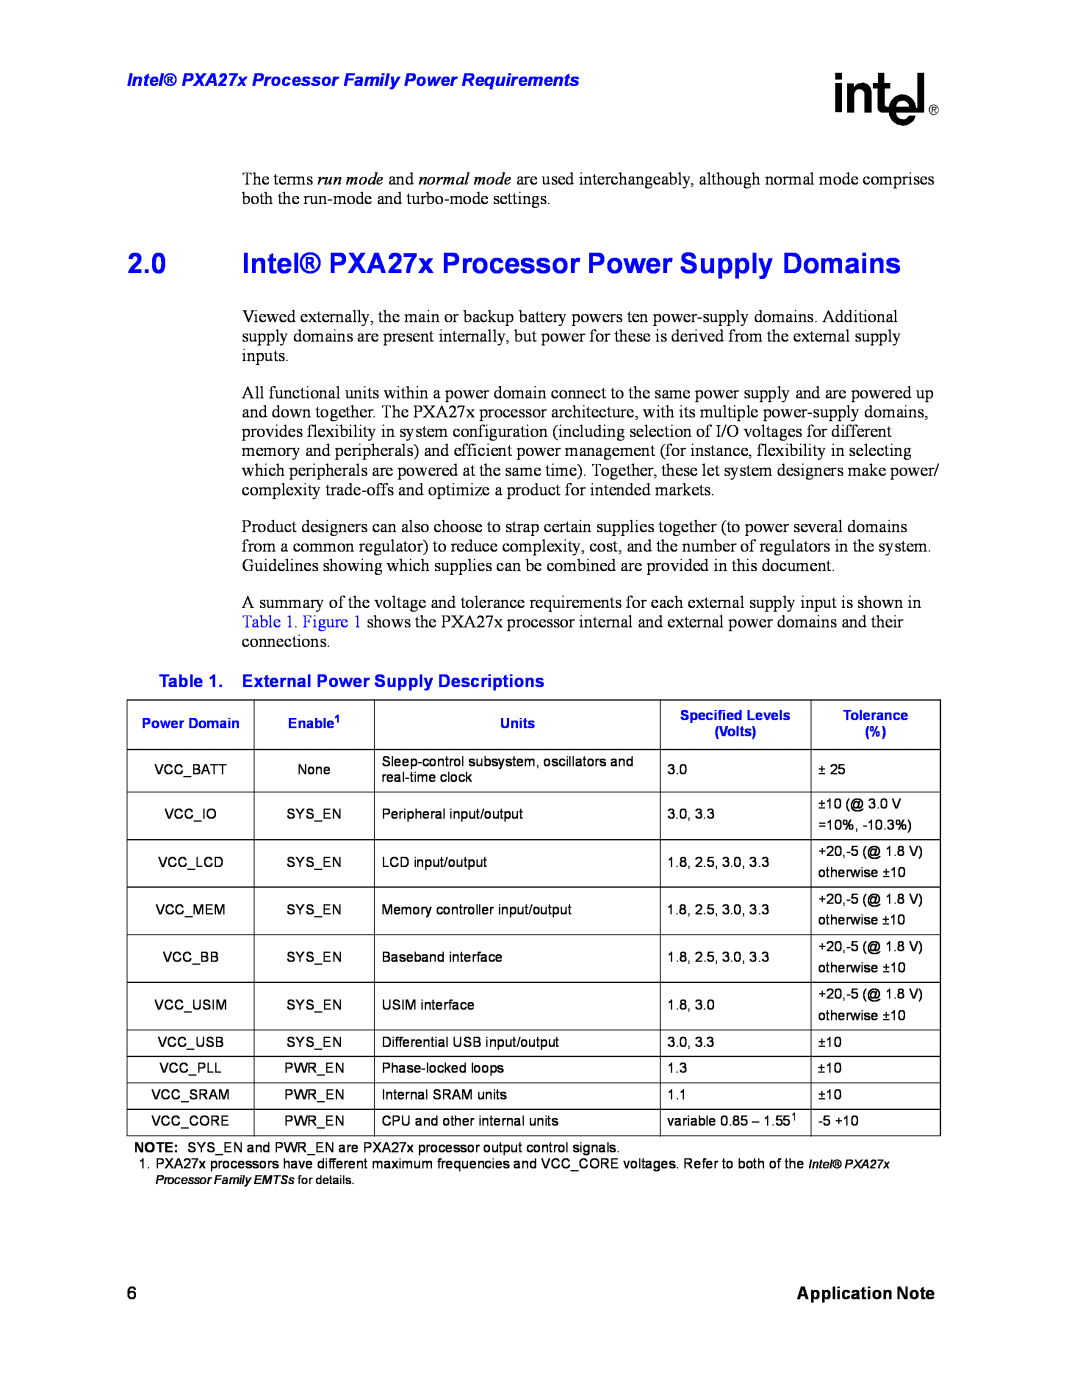 Intel PXA27X manual Intel PXA27x Processor Power Supply Domains, External Power Supply Descriptions, Application Note 